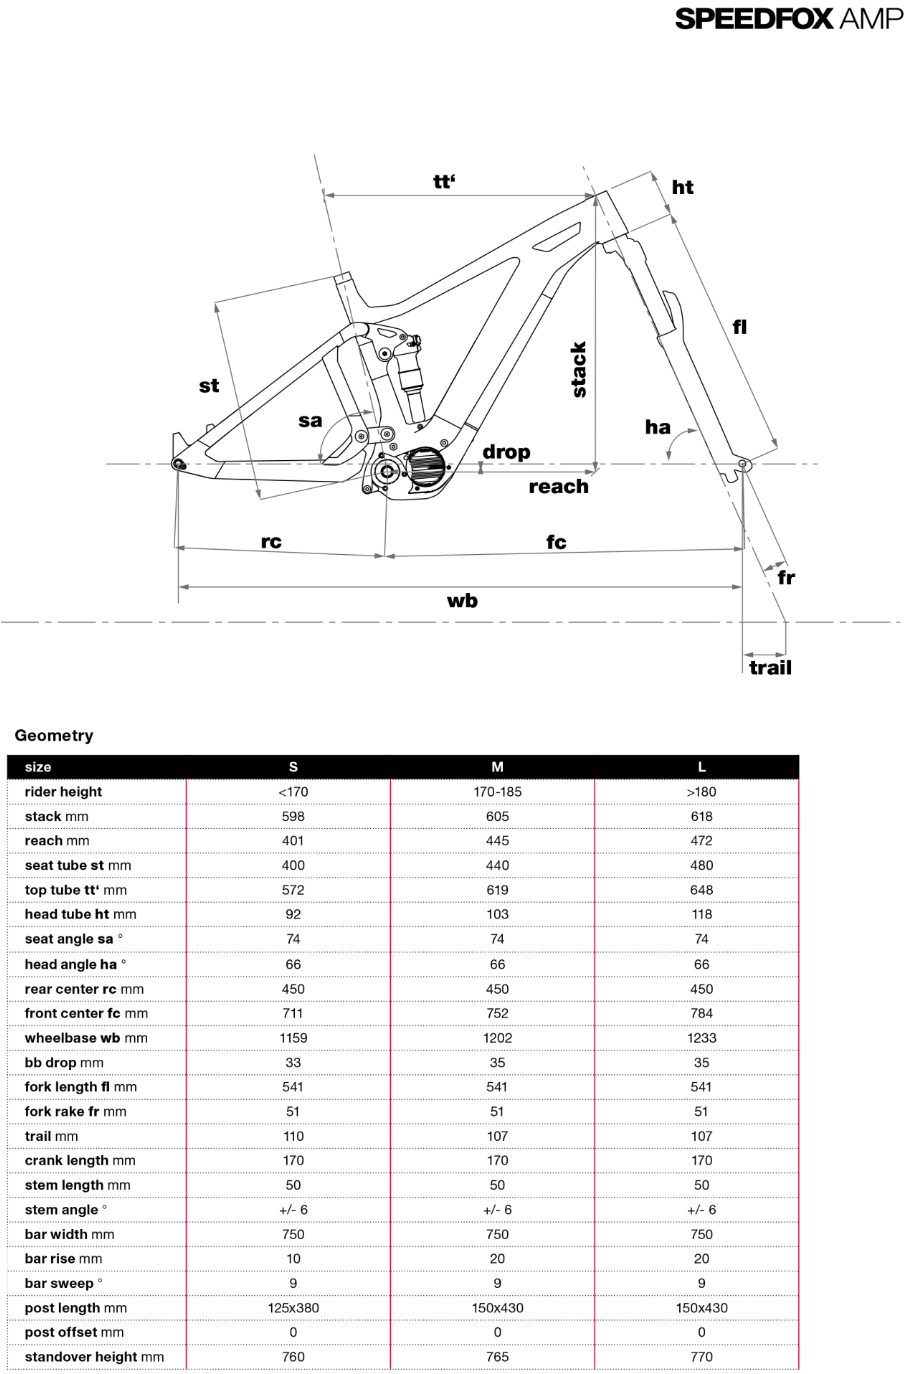 BMC Trailfox AMP geometry chart